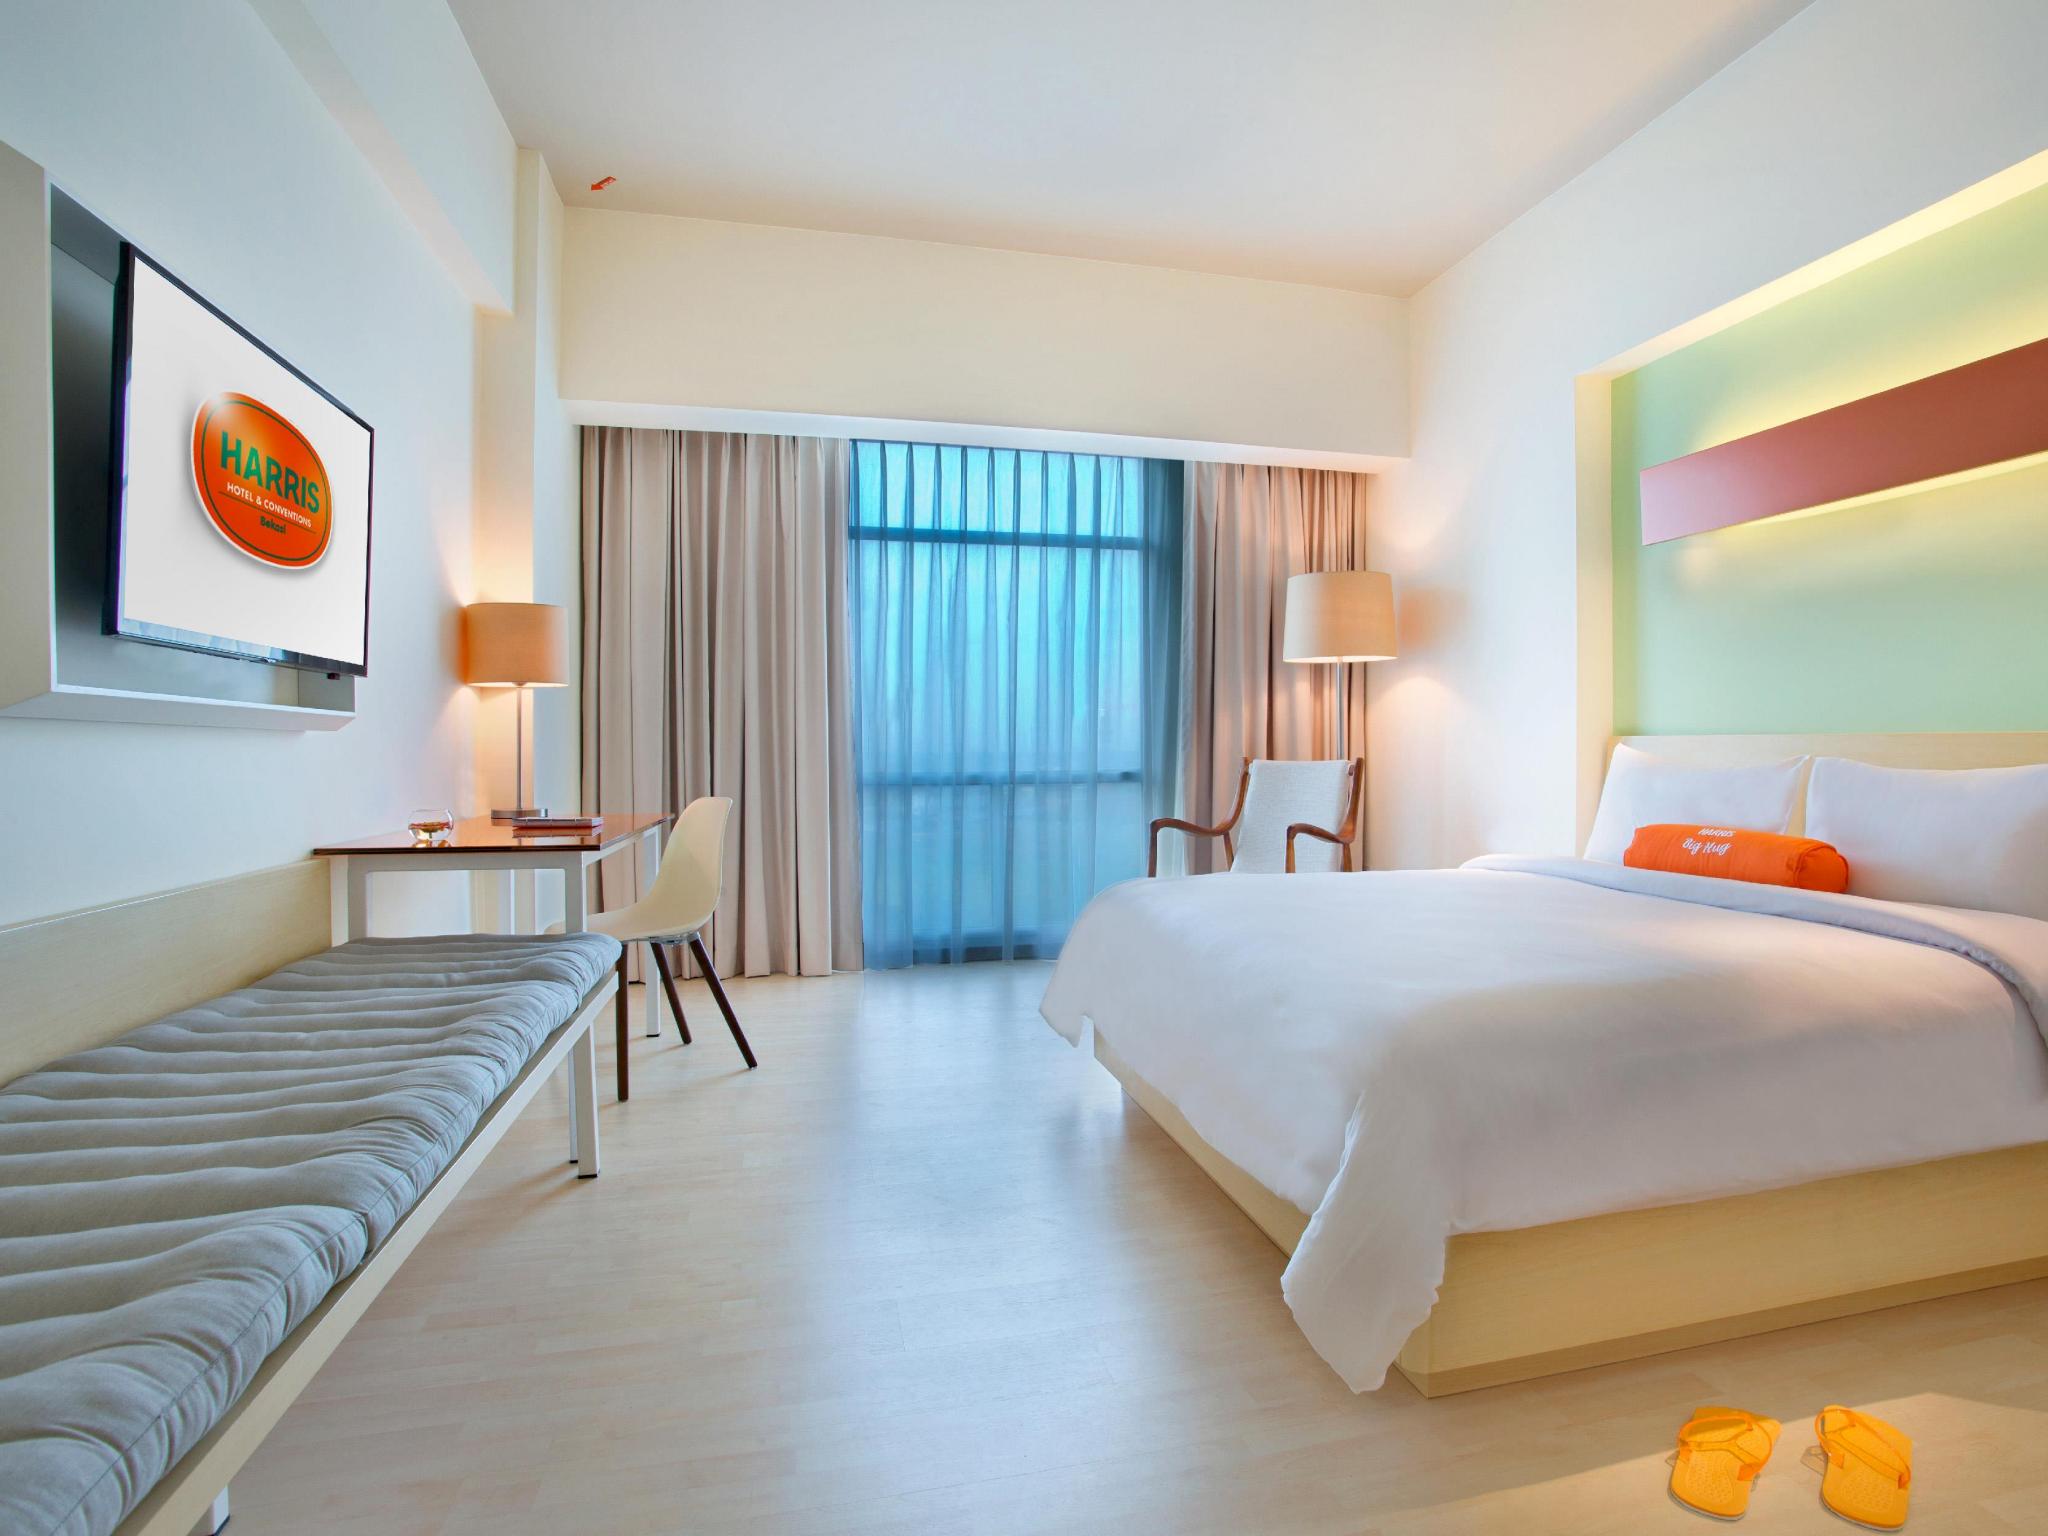 Harris Room - Bed - Hotel Harris Bekasi , HD Wallpaper & Backgrounds